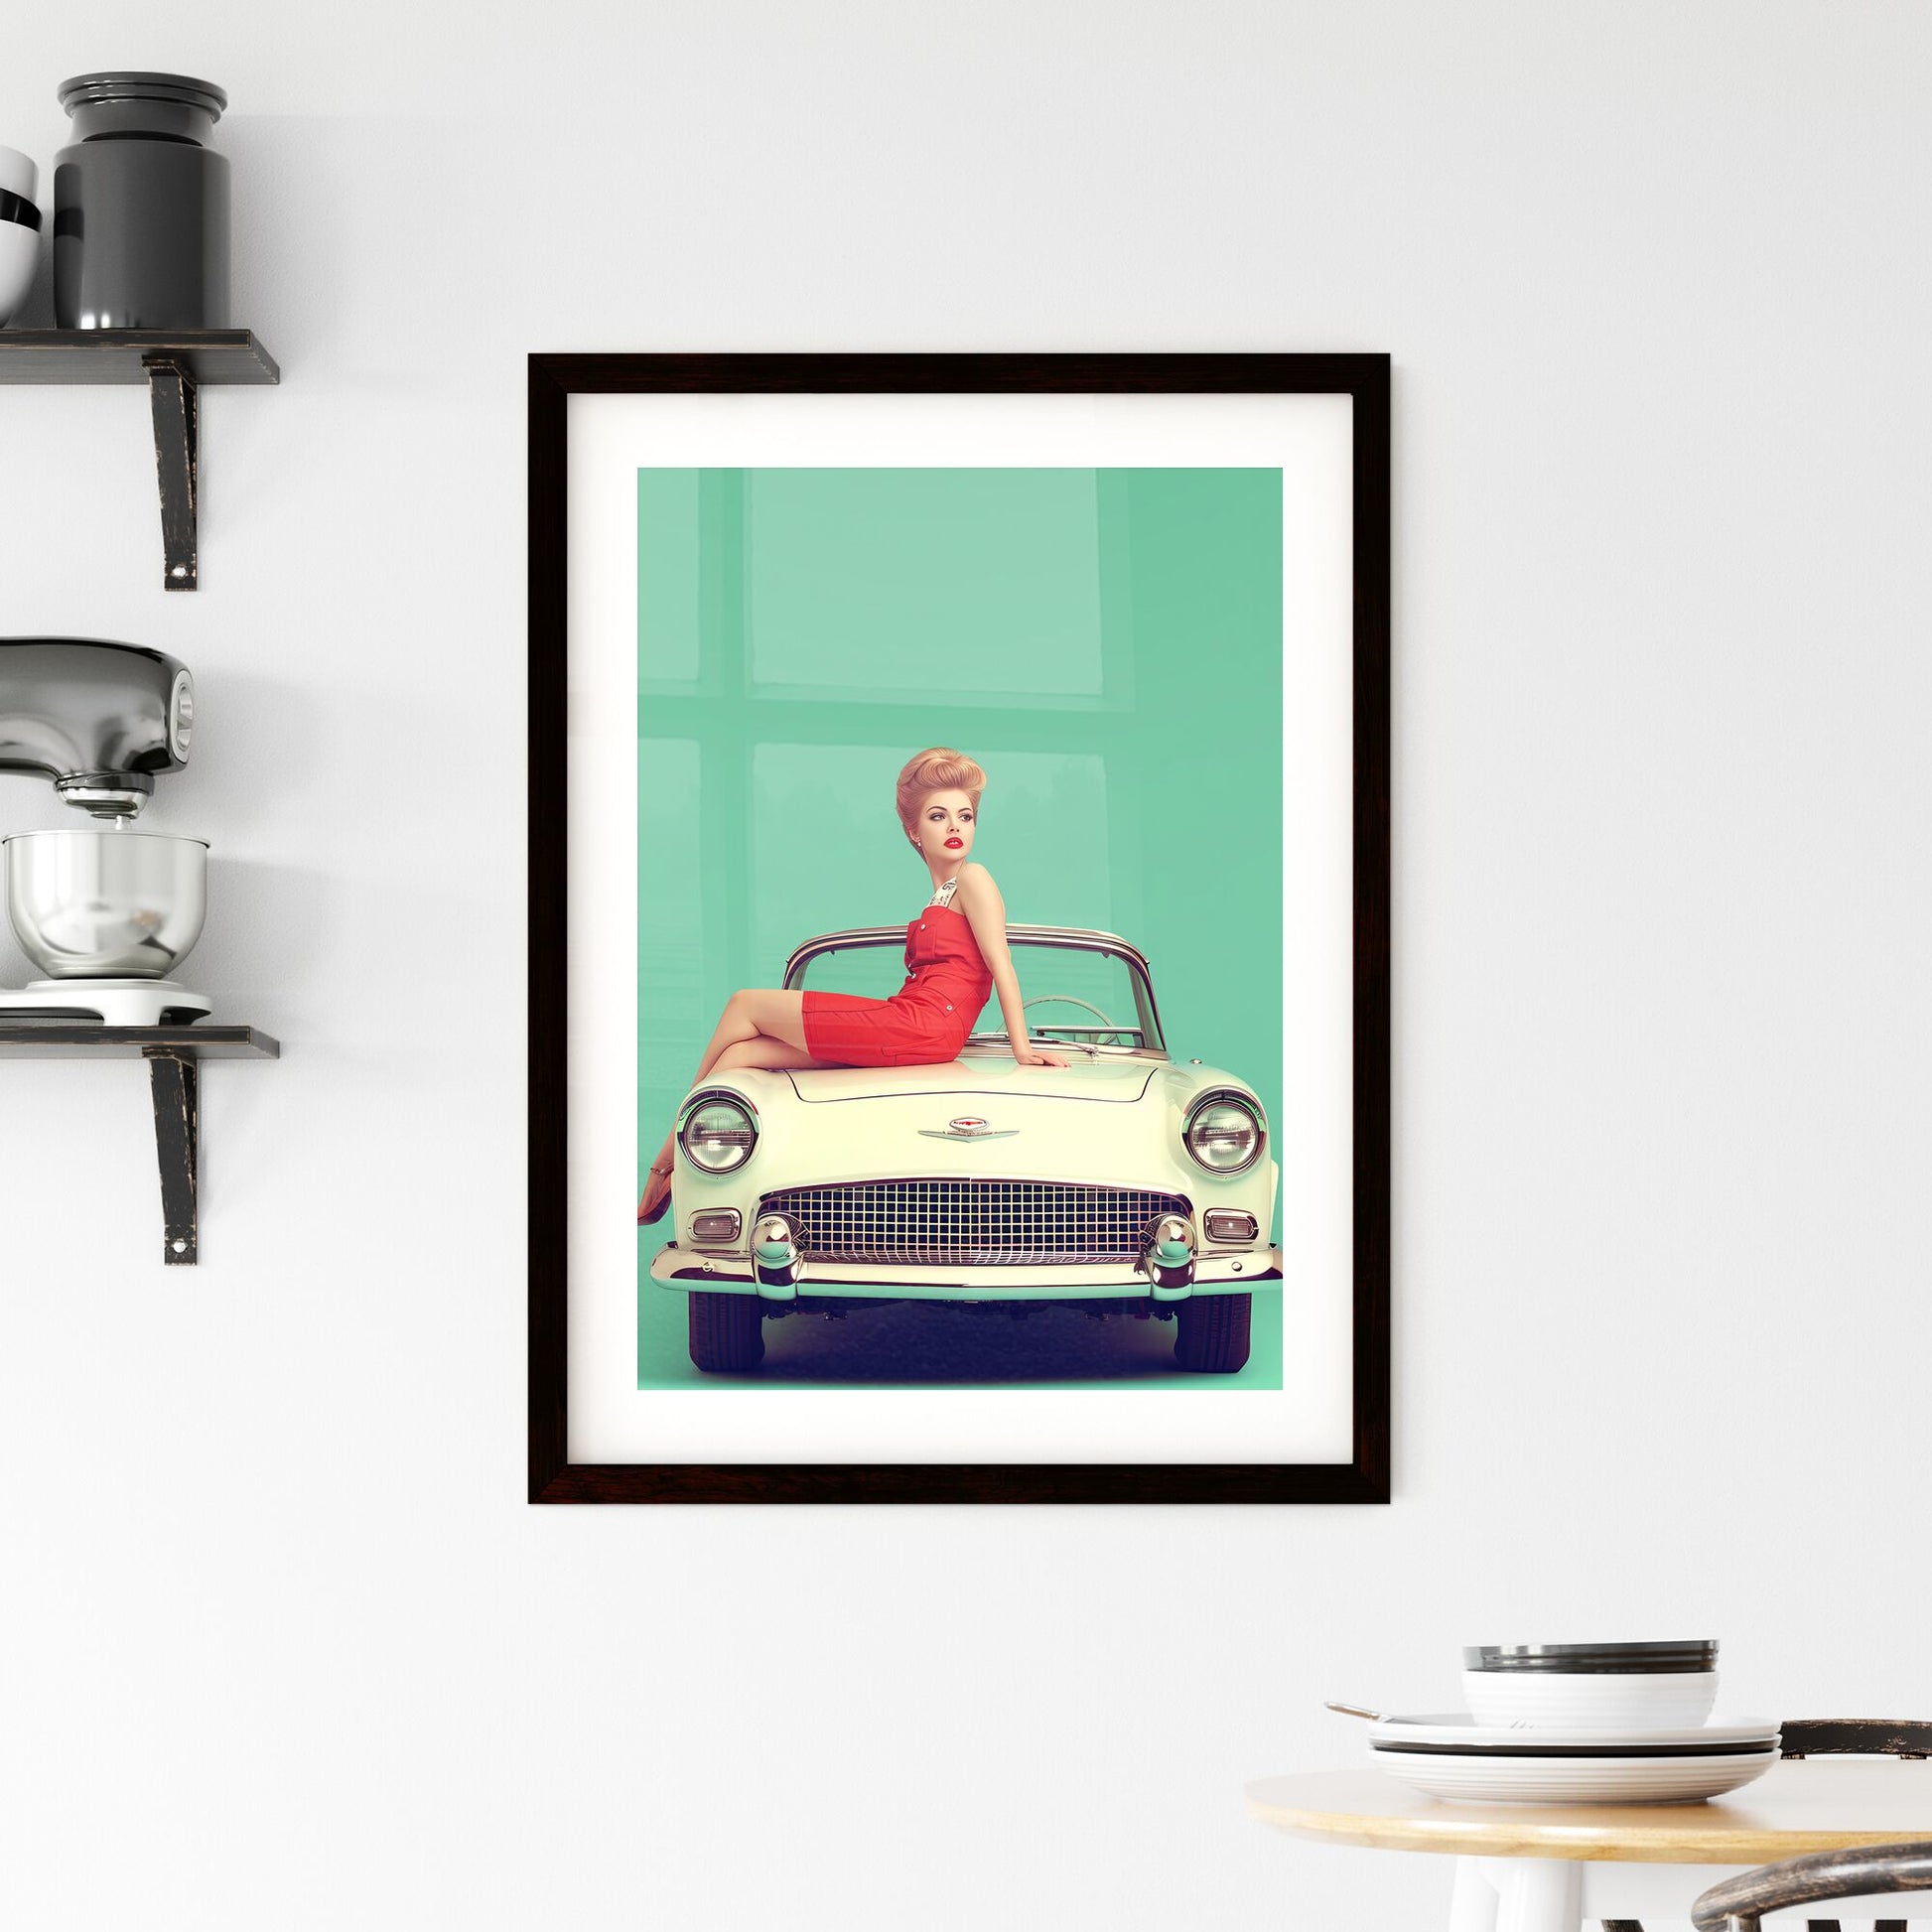 Auto mechanic - Art print of a woman sitting on a car Default Title